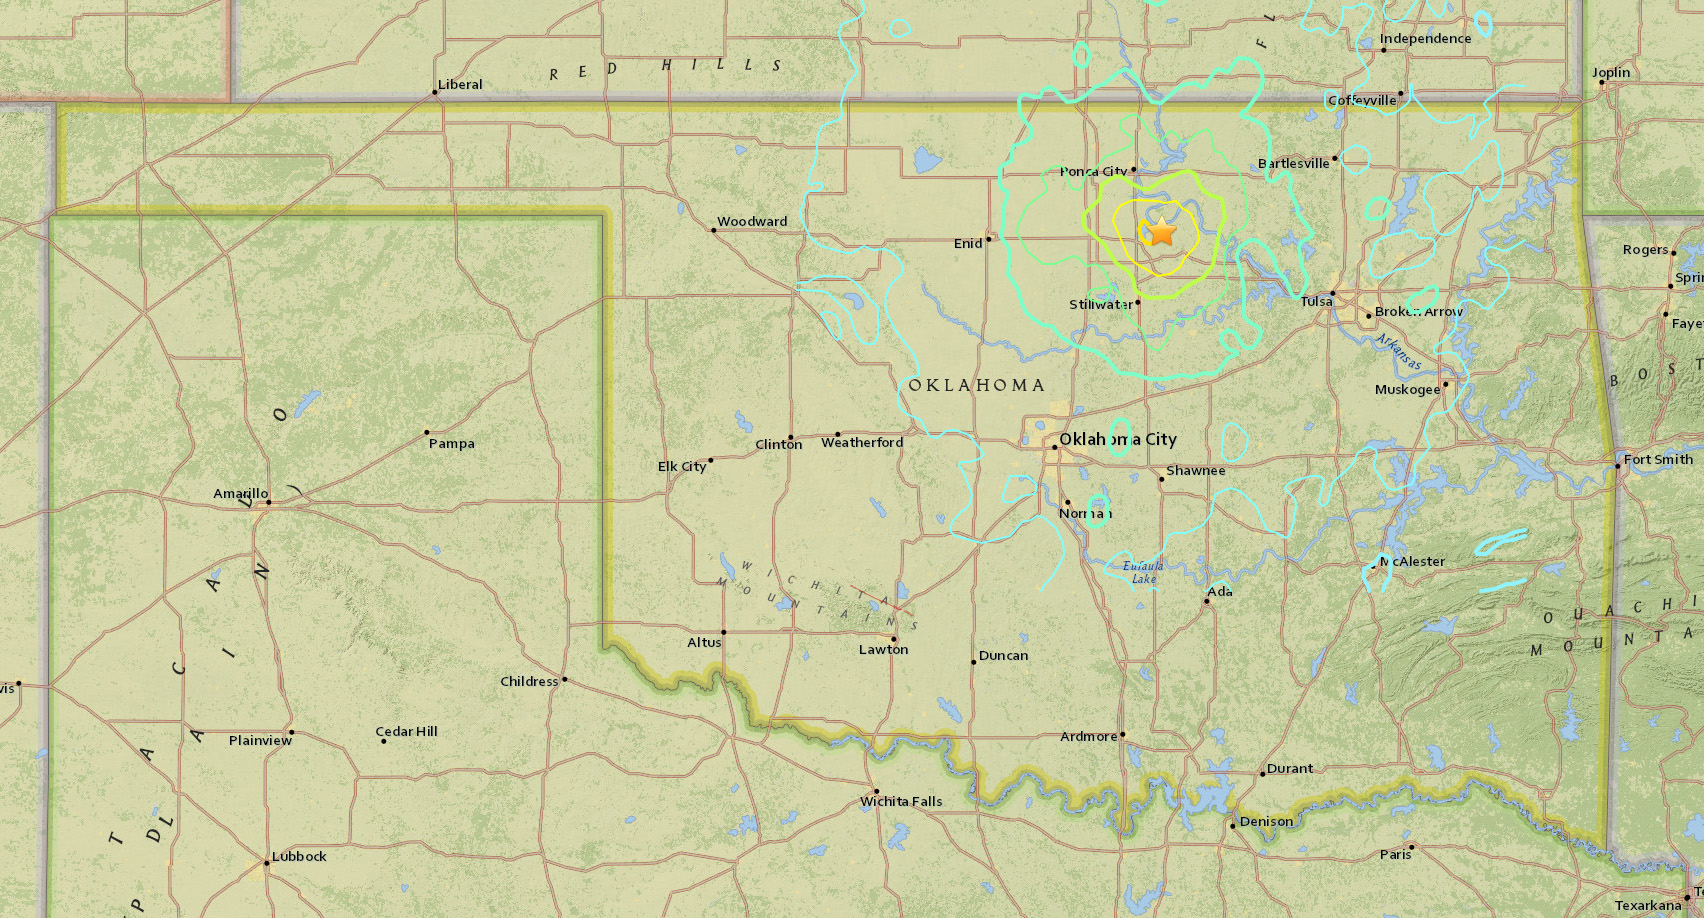 Magnitude 5.6 earthquake in Oklahoma ties biggest area has seen | Ars Technica ...1704 x 918